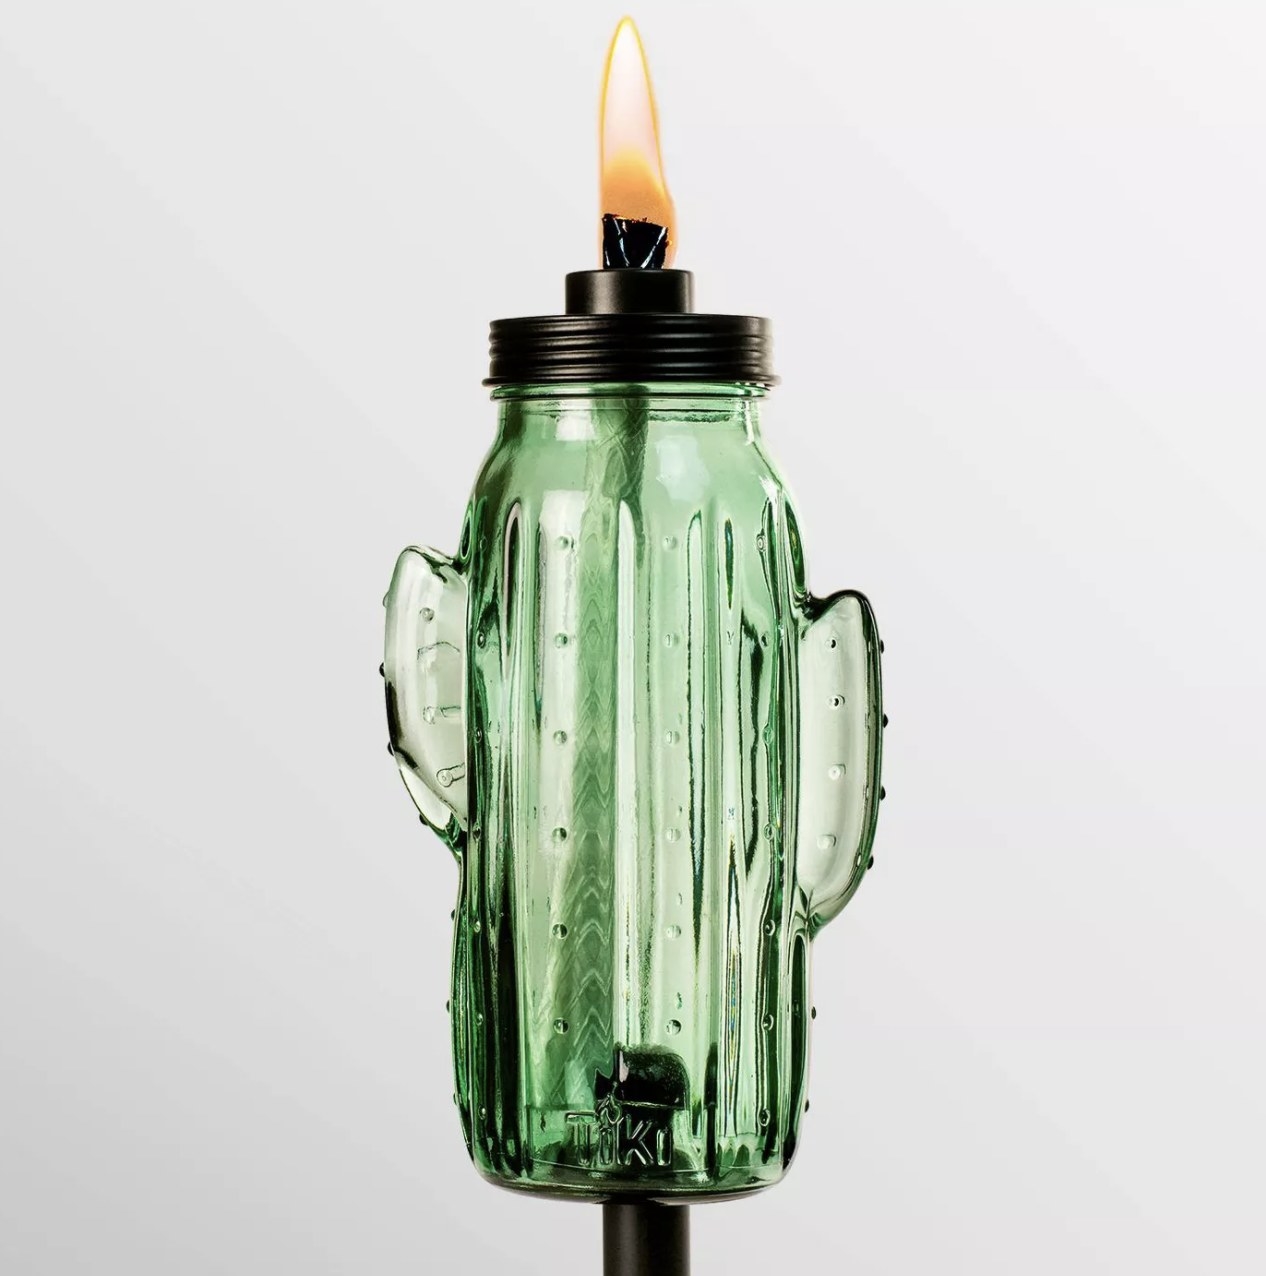 A glass cactus torch with a lit fiberglass wick